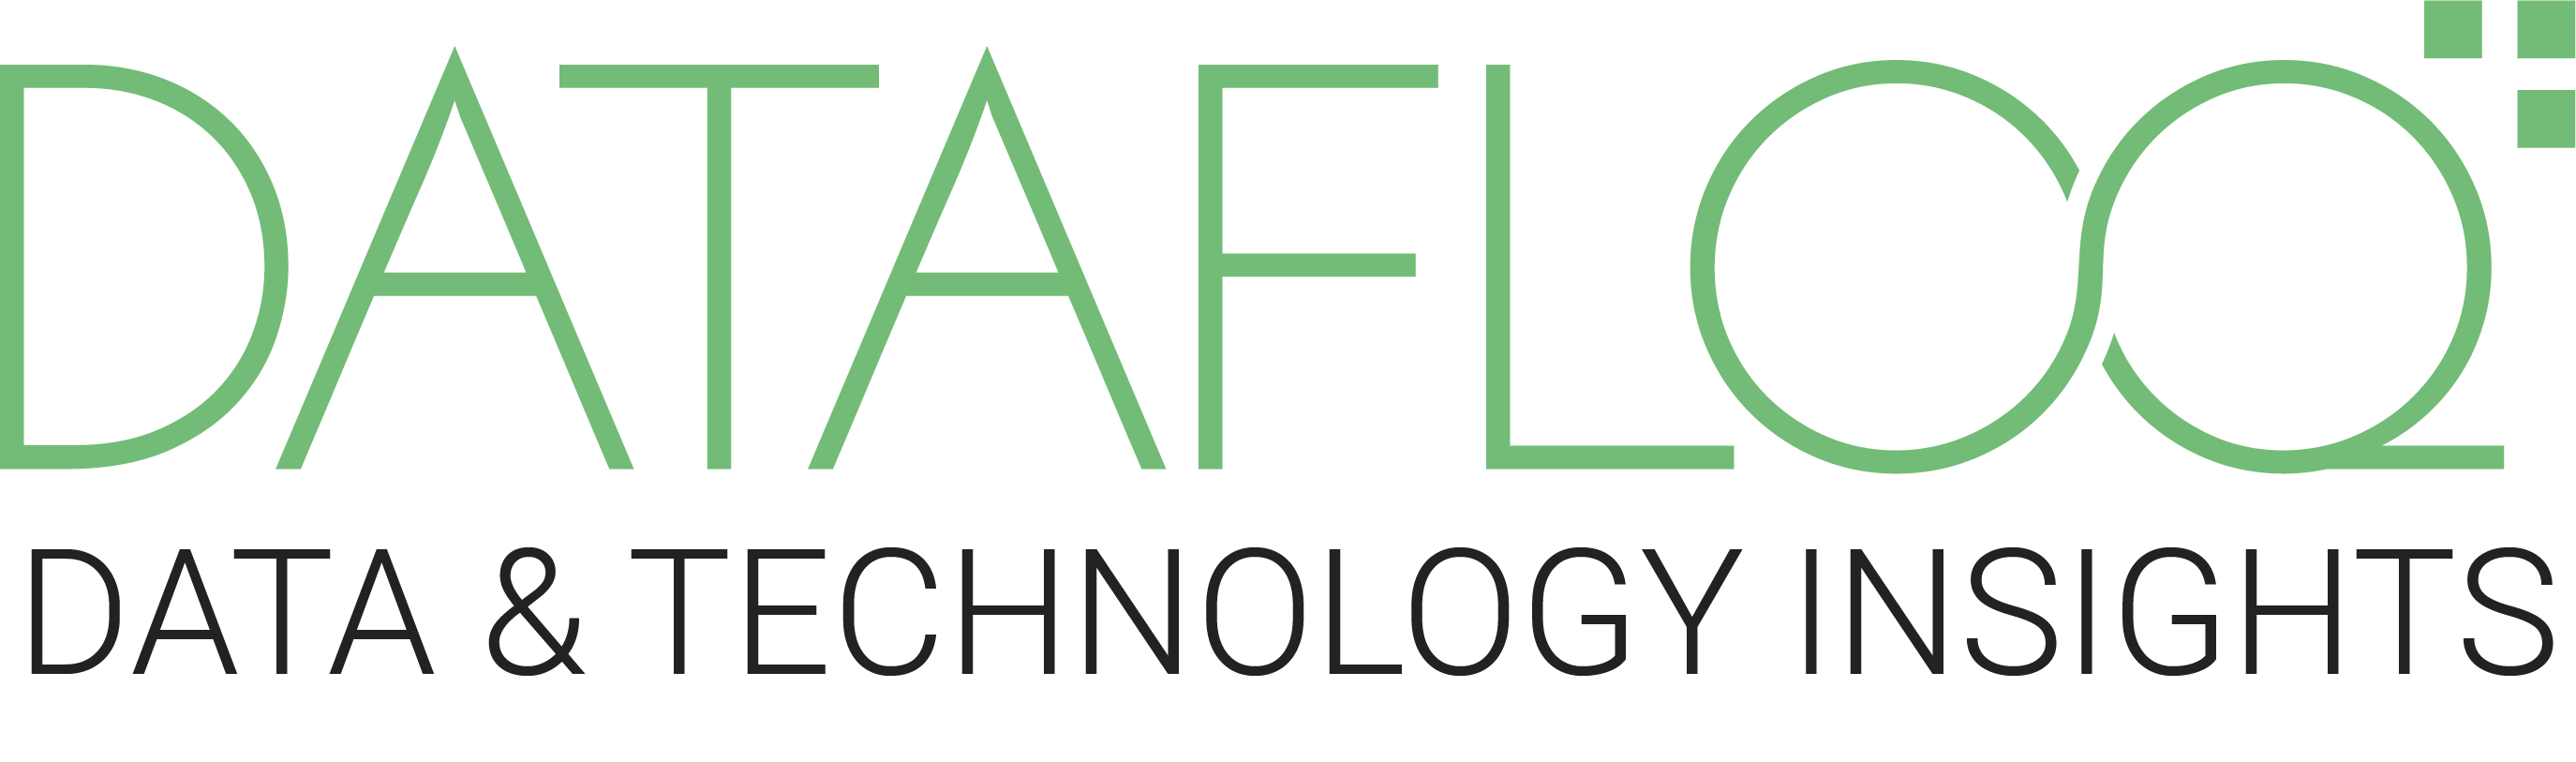 Datafloq_Logo